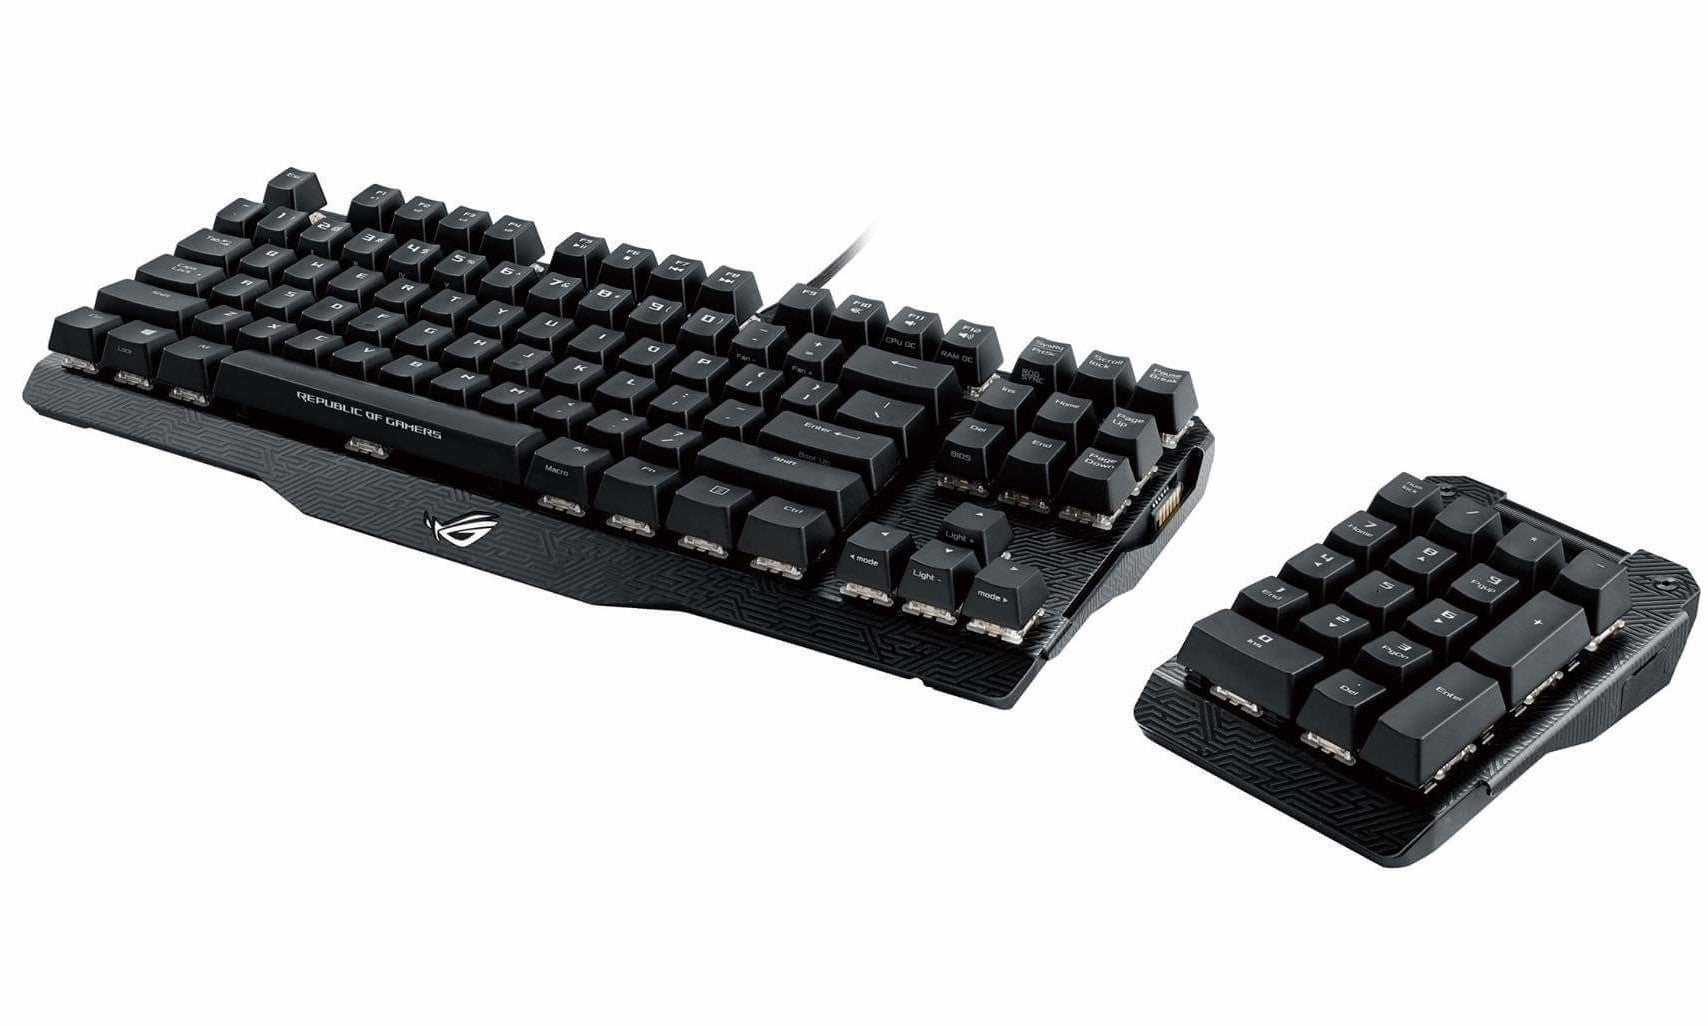 Asus ROG Claymore Gaming Keyboard